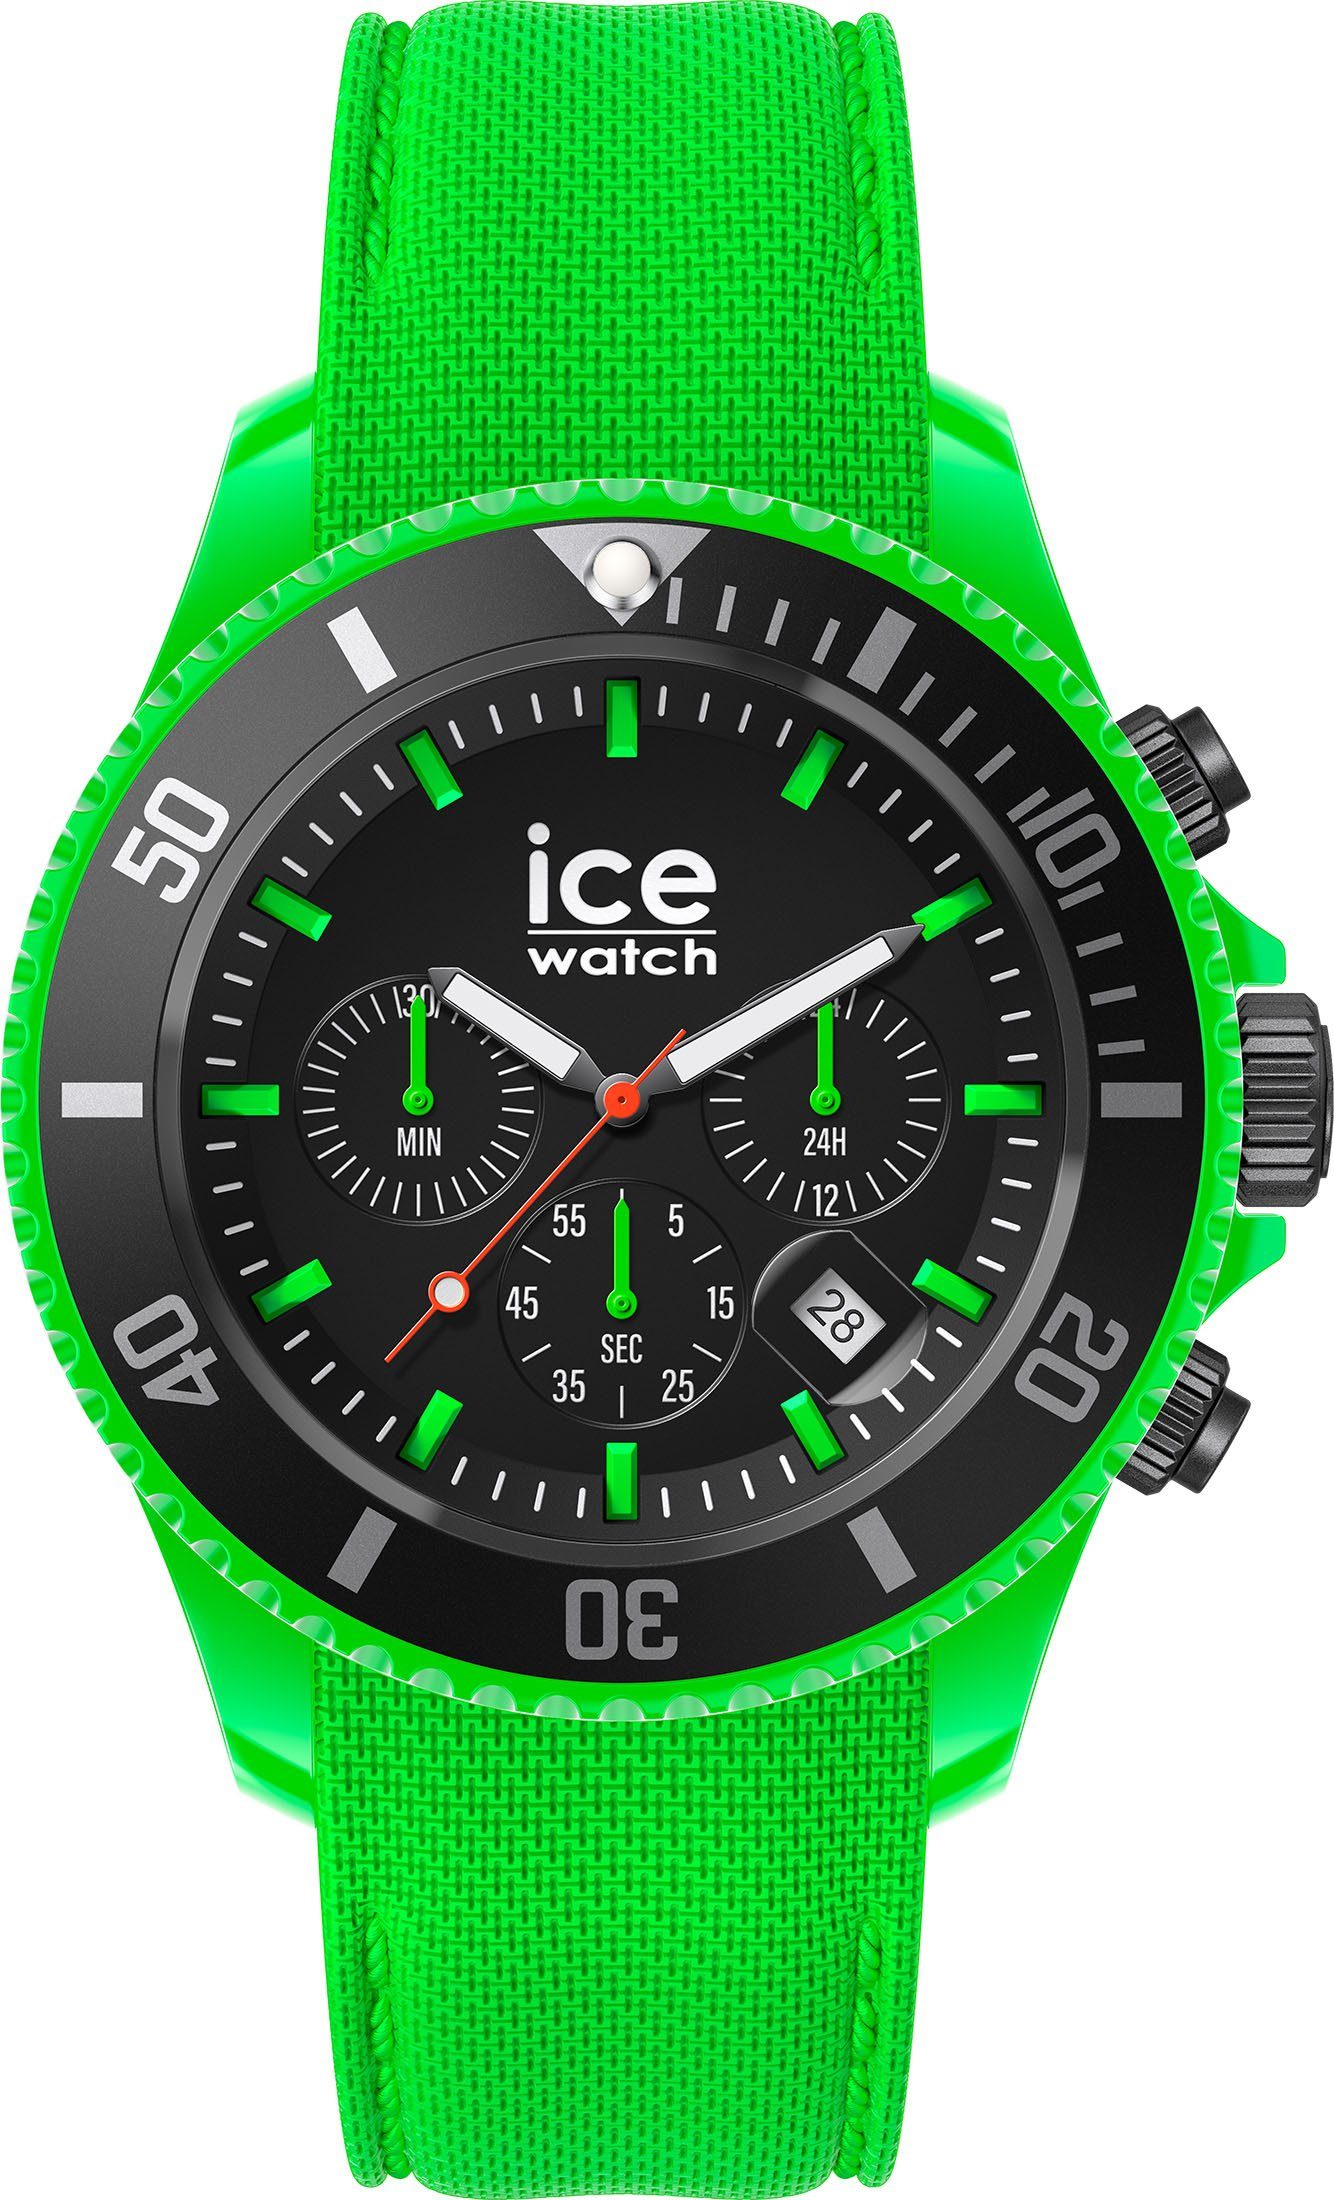 ICE grün 019839 ice-watch green - Neon Large CH, Chronograph - chrono -